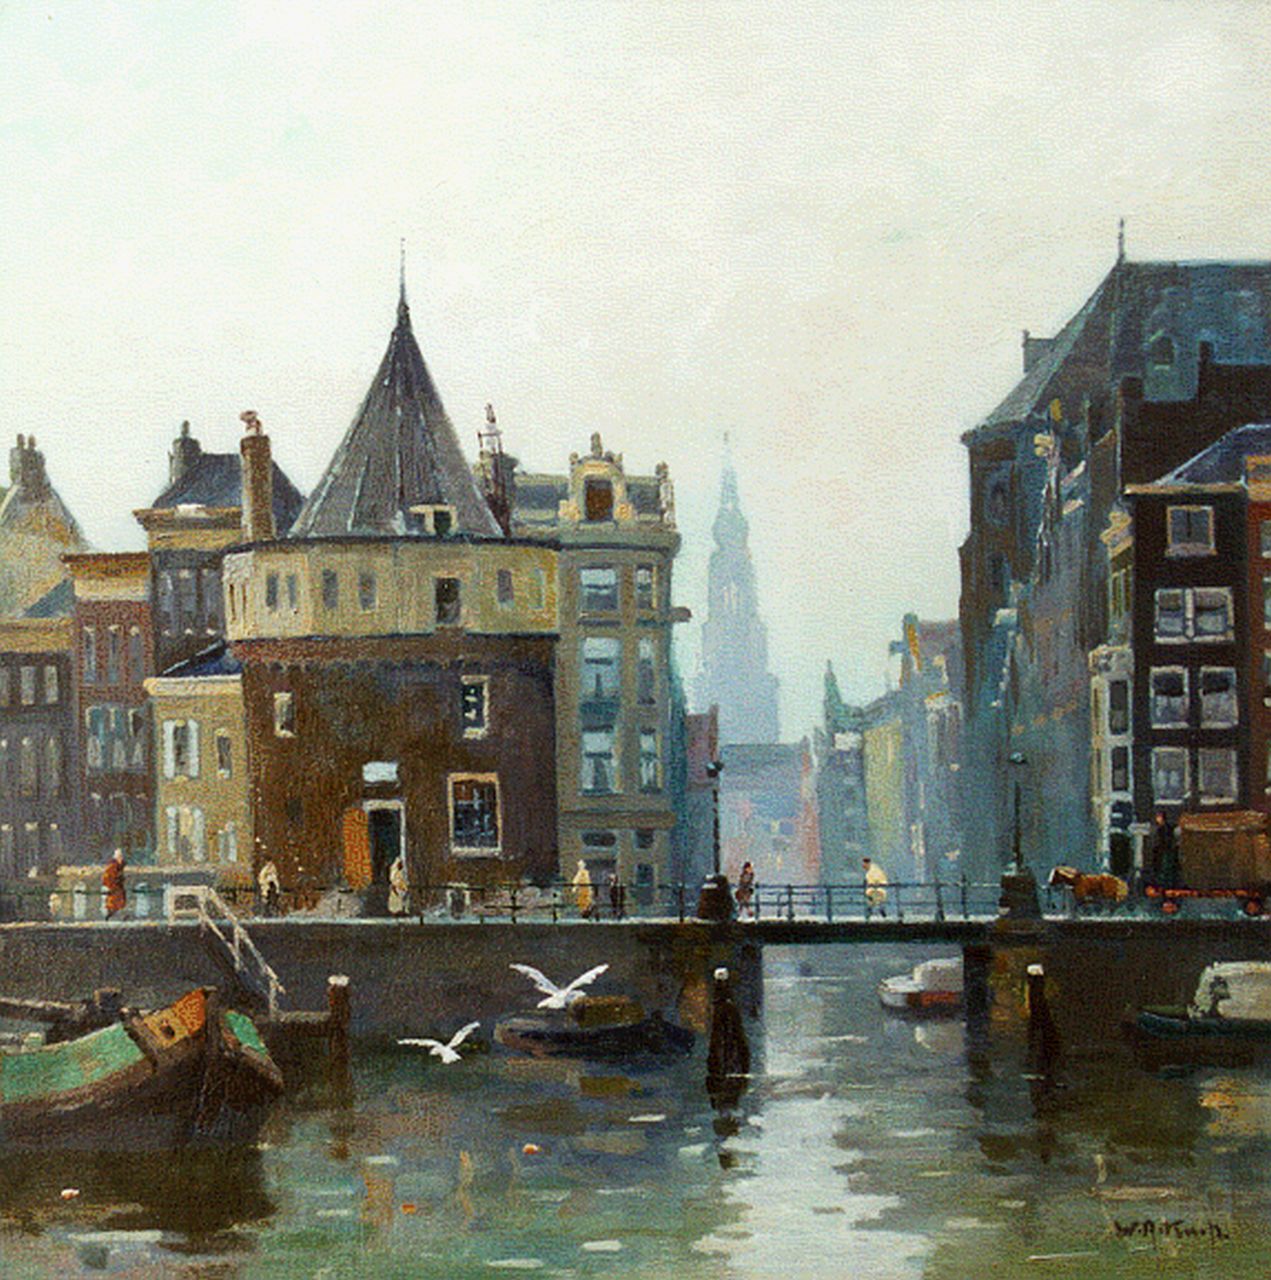 Knip W.A.  | 'Willem' Alexander Knip, Bij de Schreierstoren, Amsterdam, olieverf op doek 50,0 x 50,3 cm, gesigneerd rechtsonder